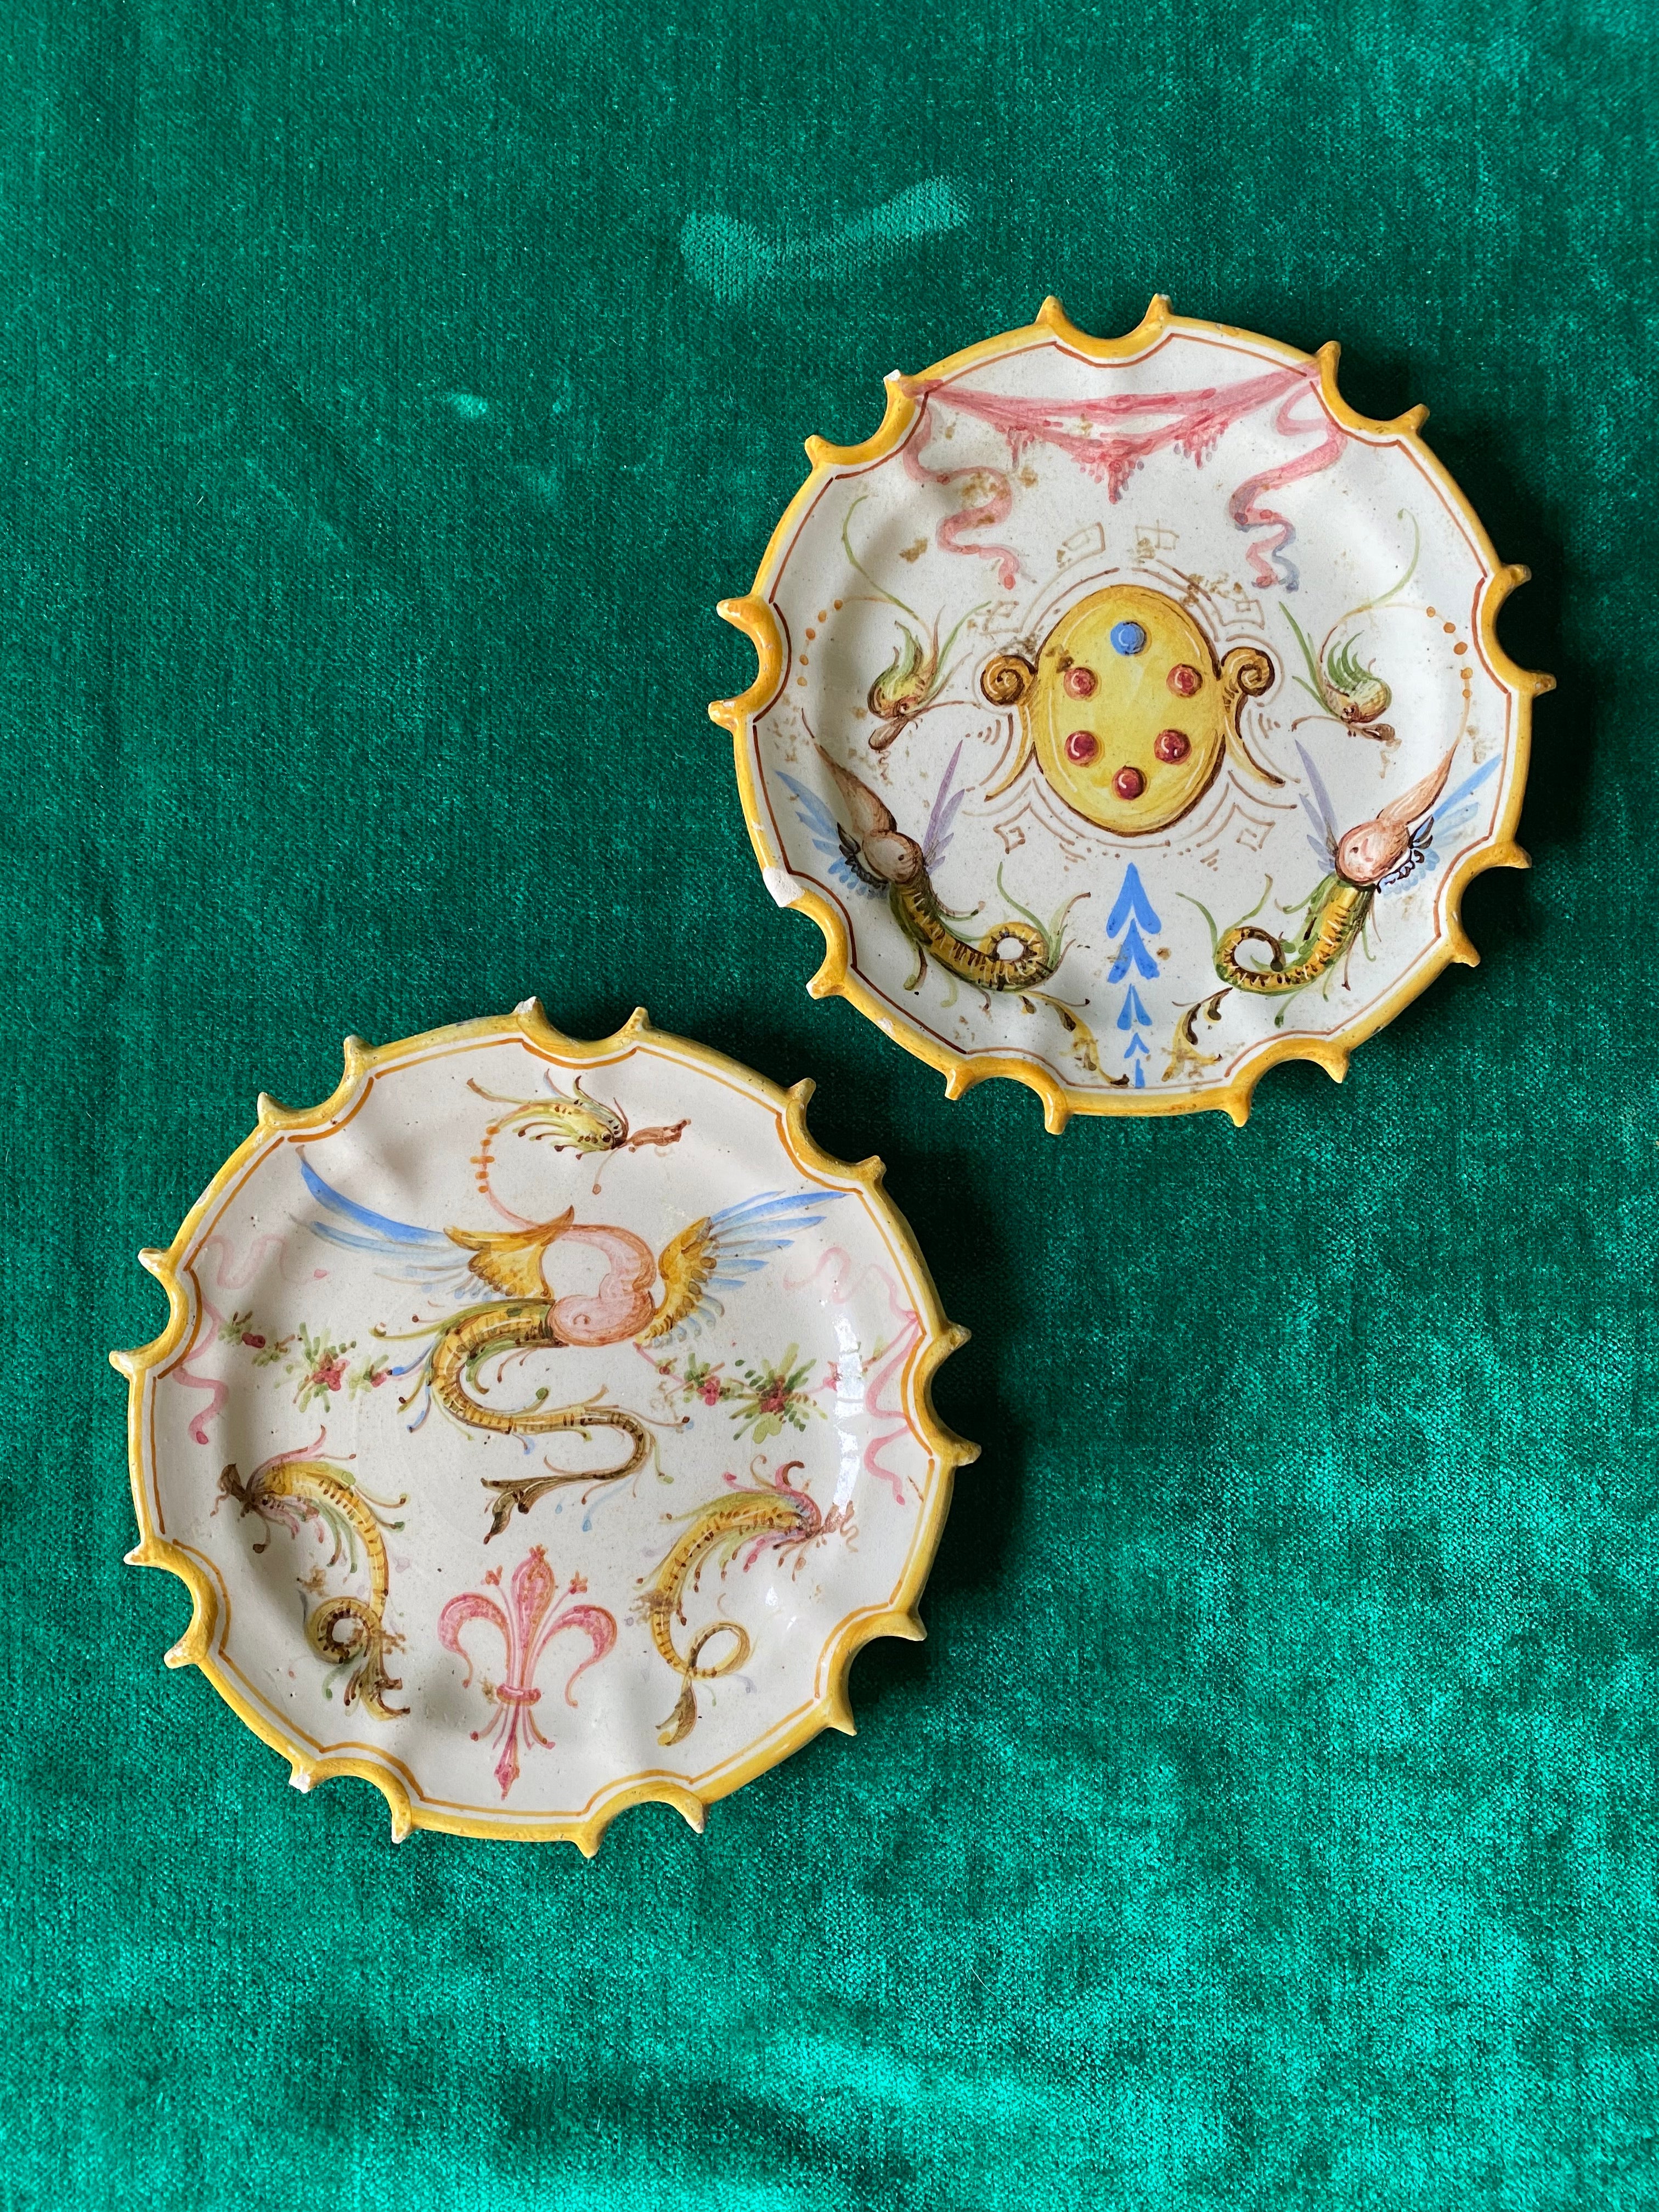 Rare Antique Italian Majolica Fantasy Plates